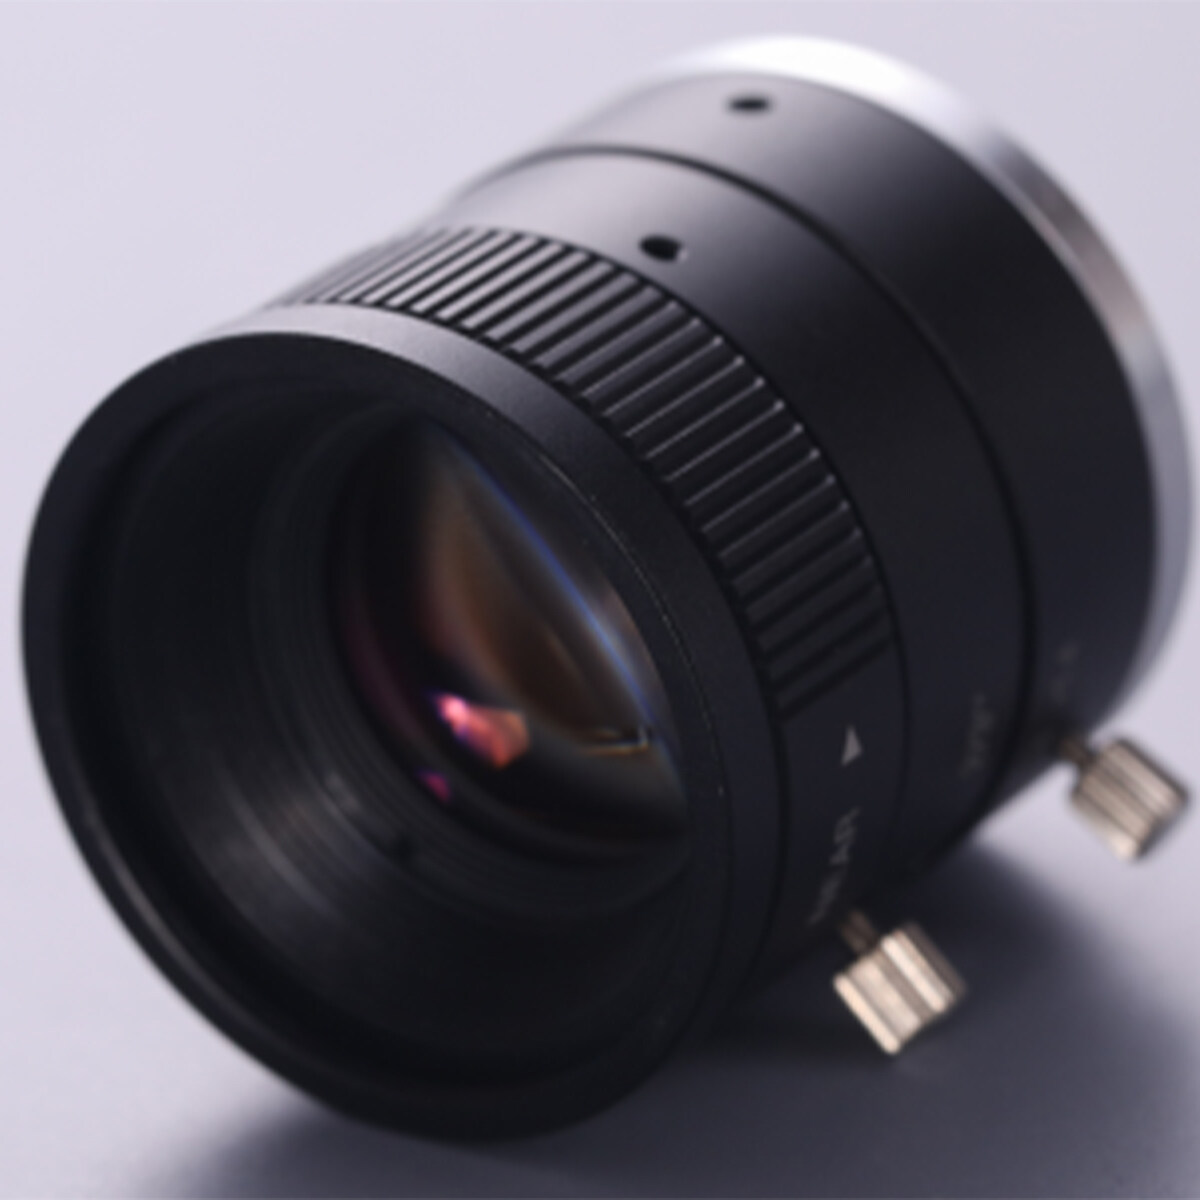 cctv lens manufacturers, cctv lens manufacturer, chinese camera lens manufacturers